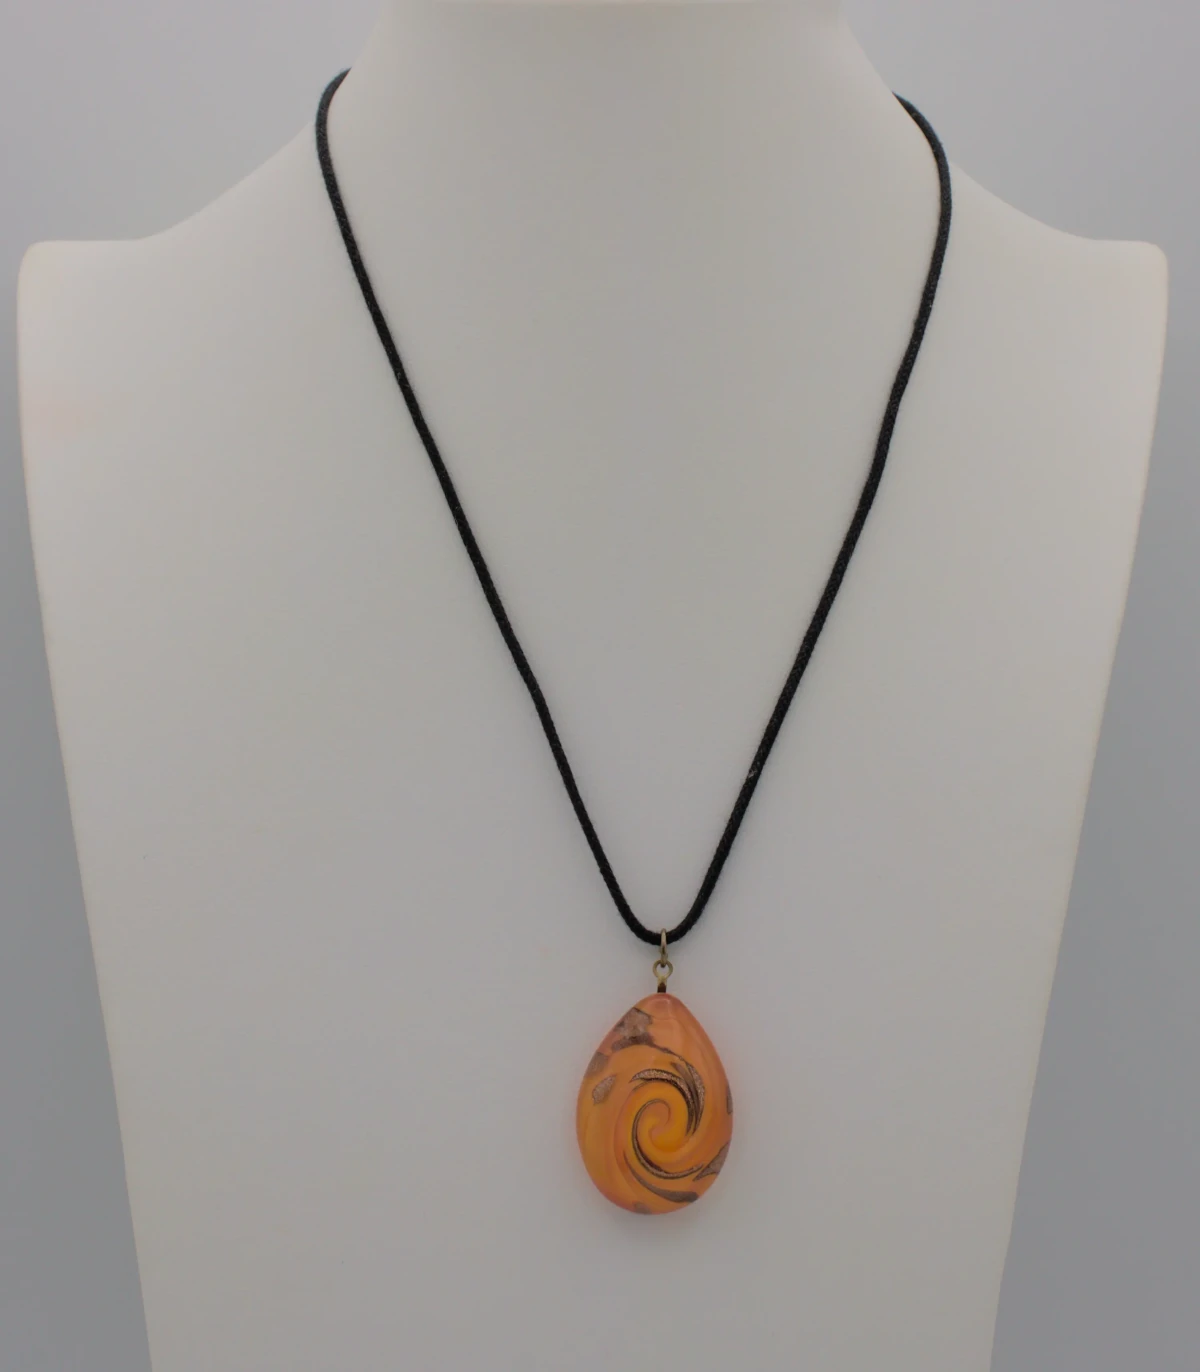 Murano glass orange teardrop pendant with copper swirls on black cotton cord